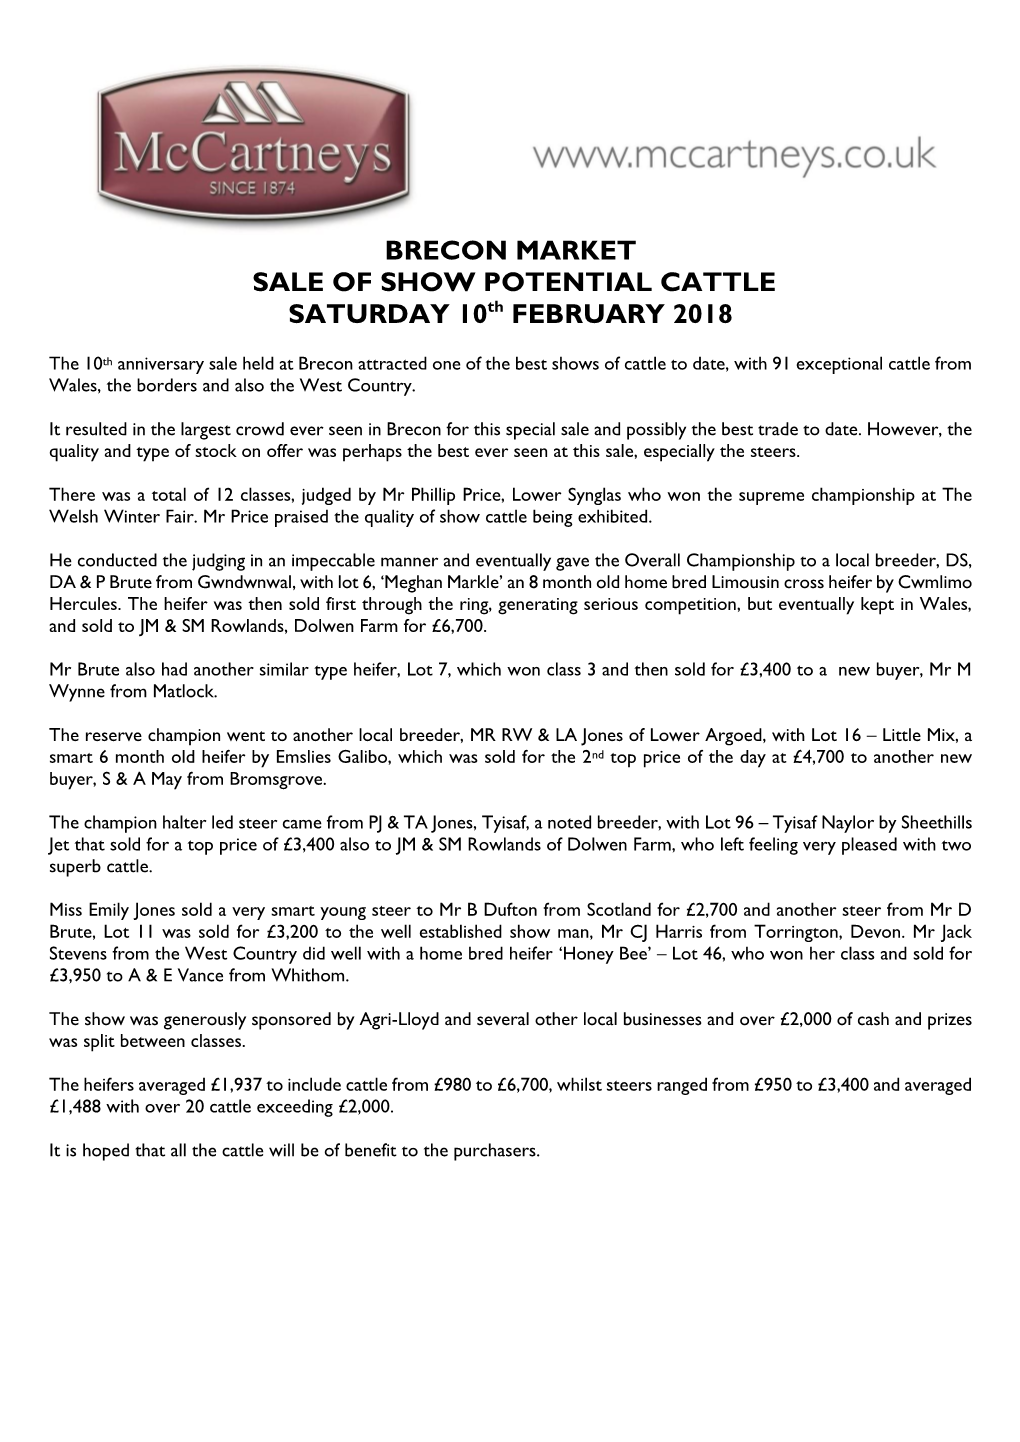 BRECON MARKET SALE of SHOW POTENTIAL CATTLE SATURDAY 10Th FEBRUARY 2018